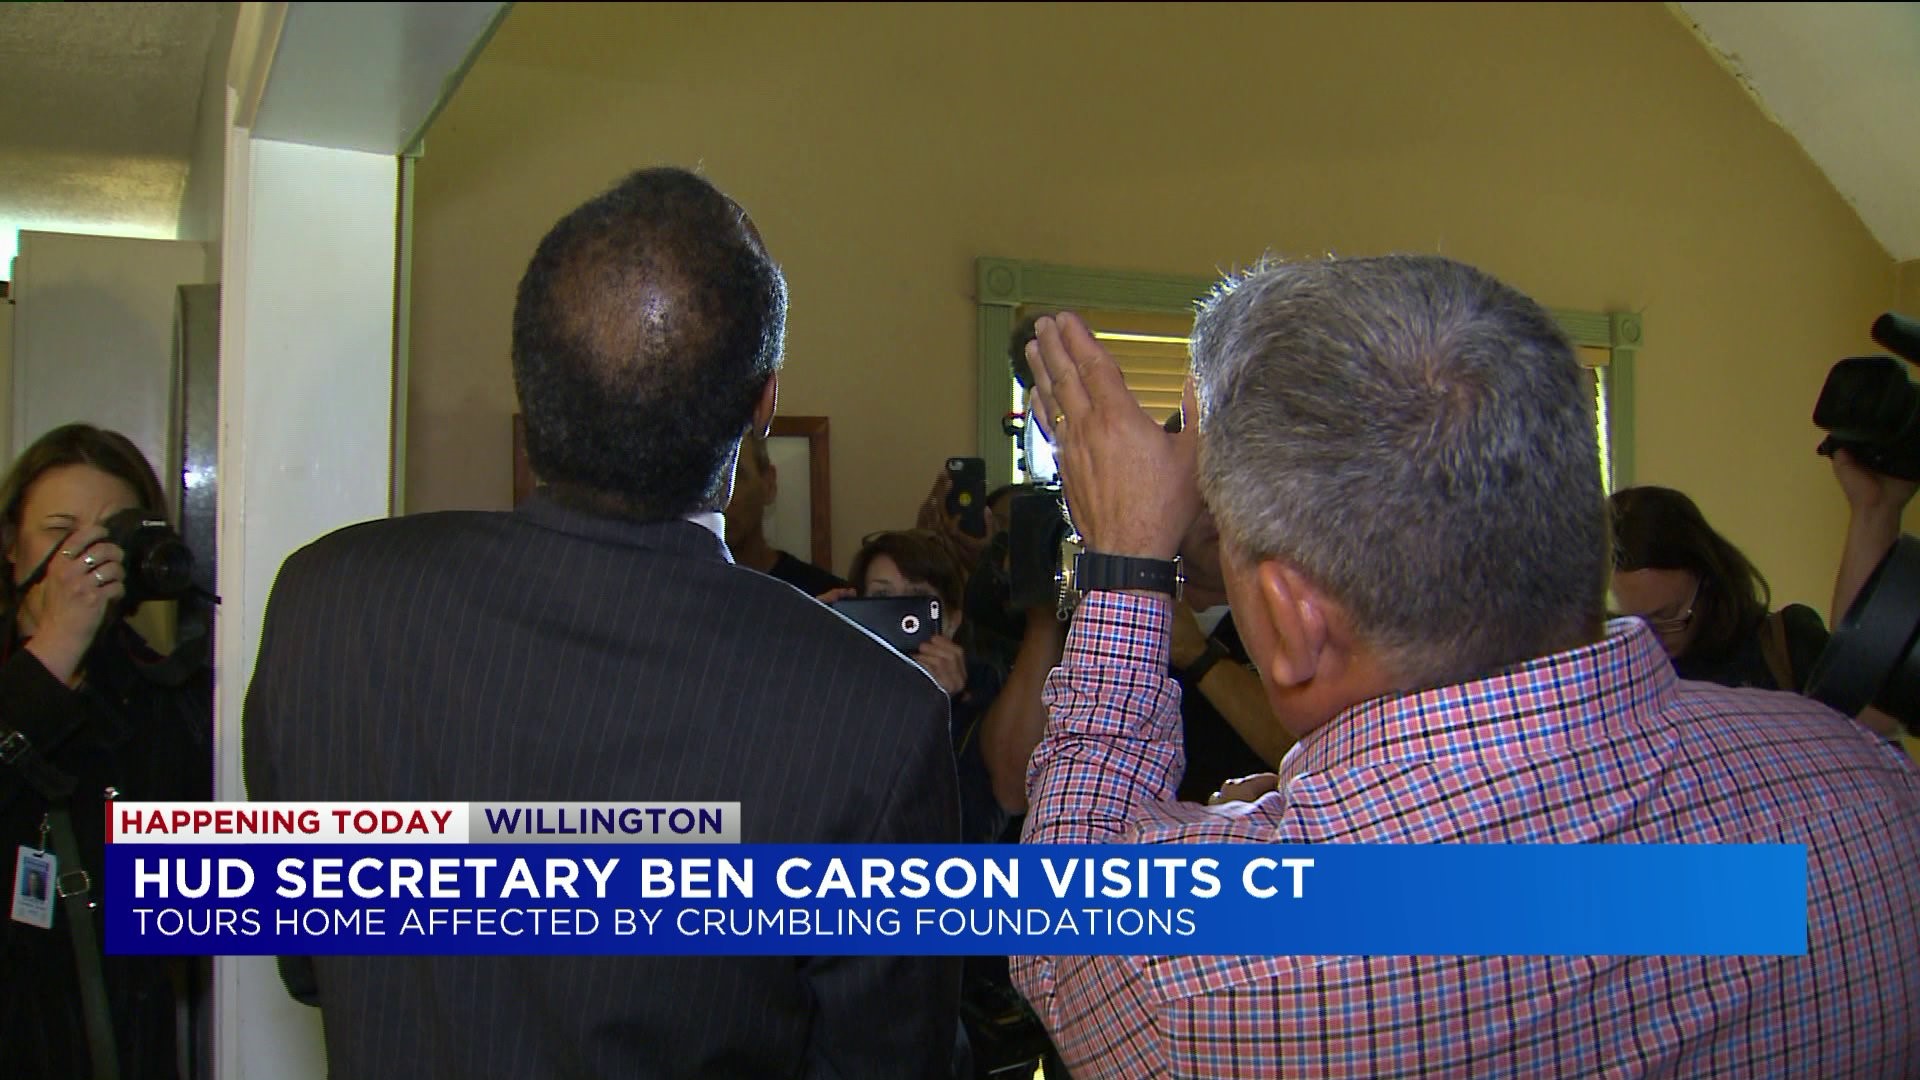 Carson visits CT